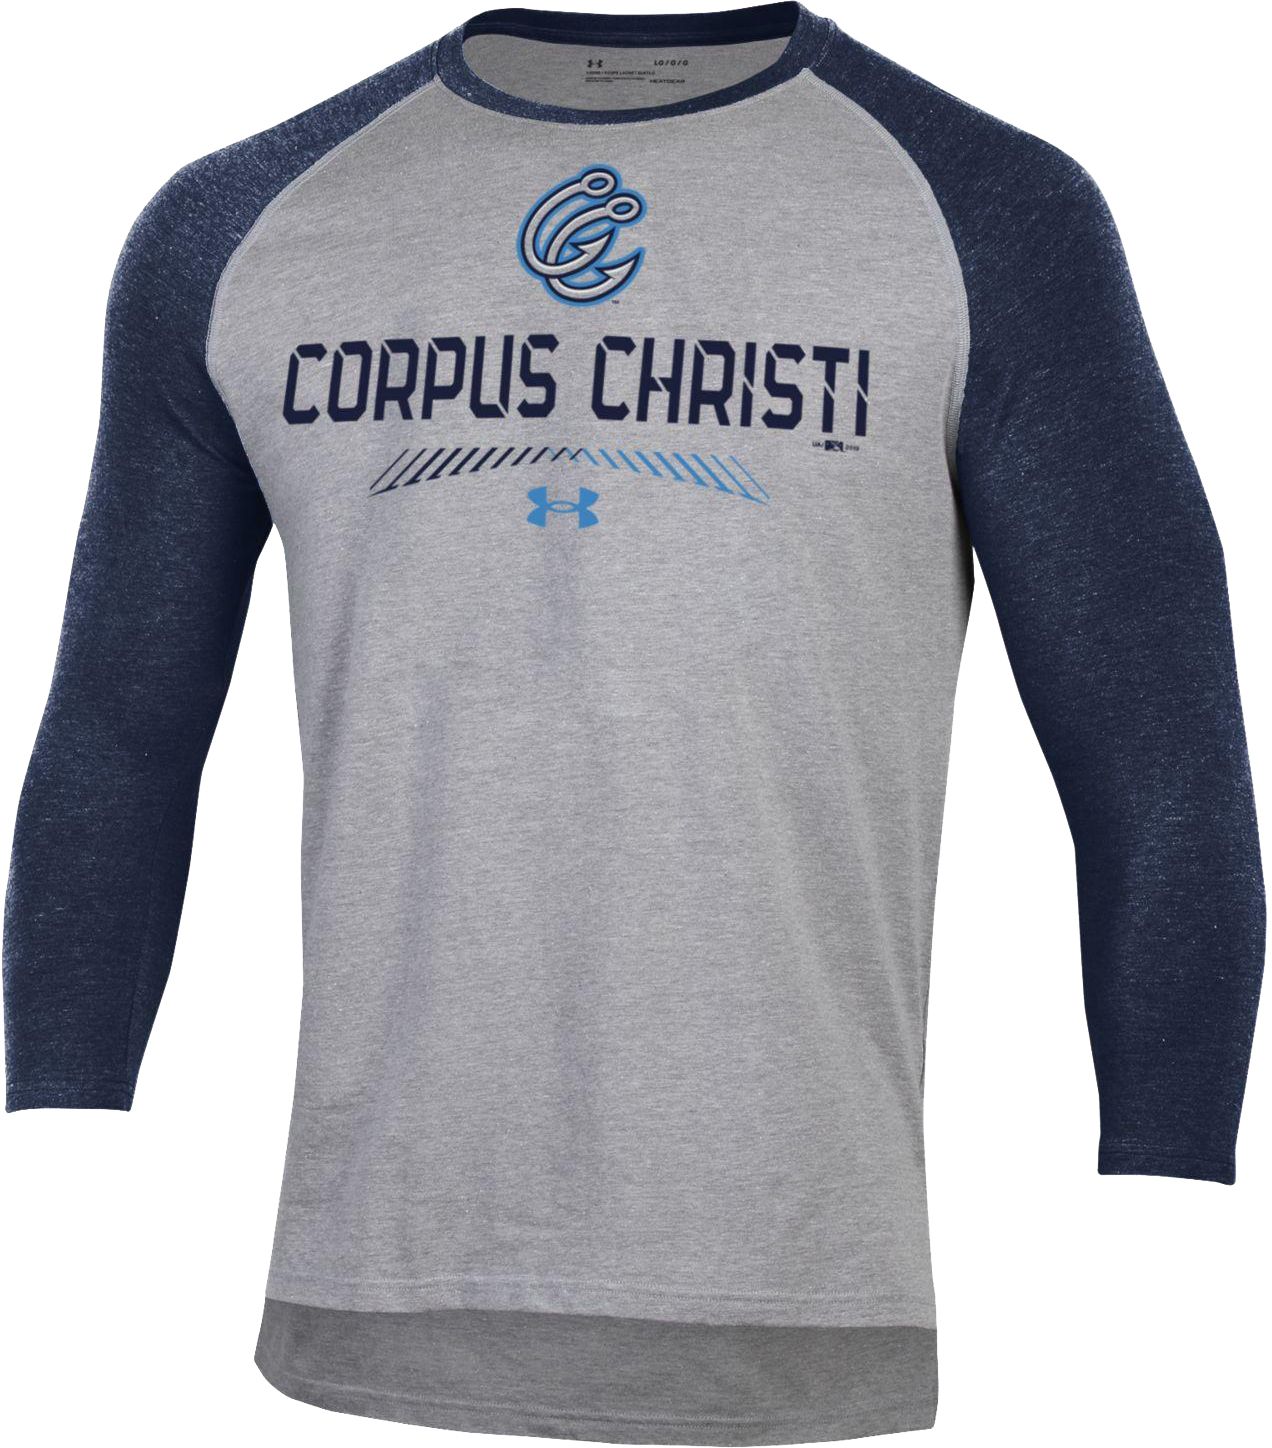 corpus christi hooks jersey